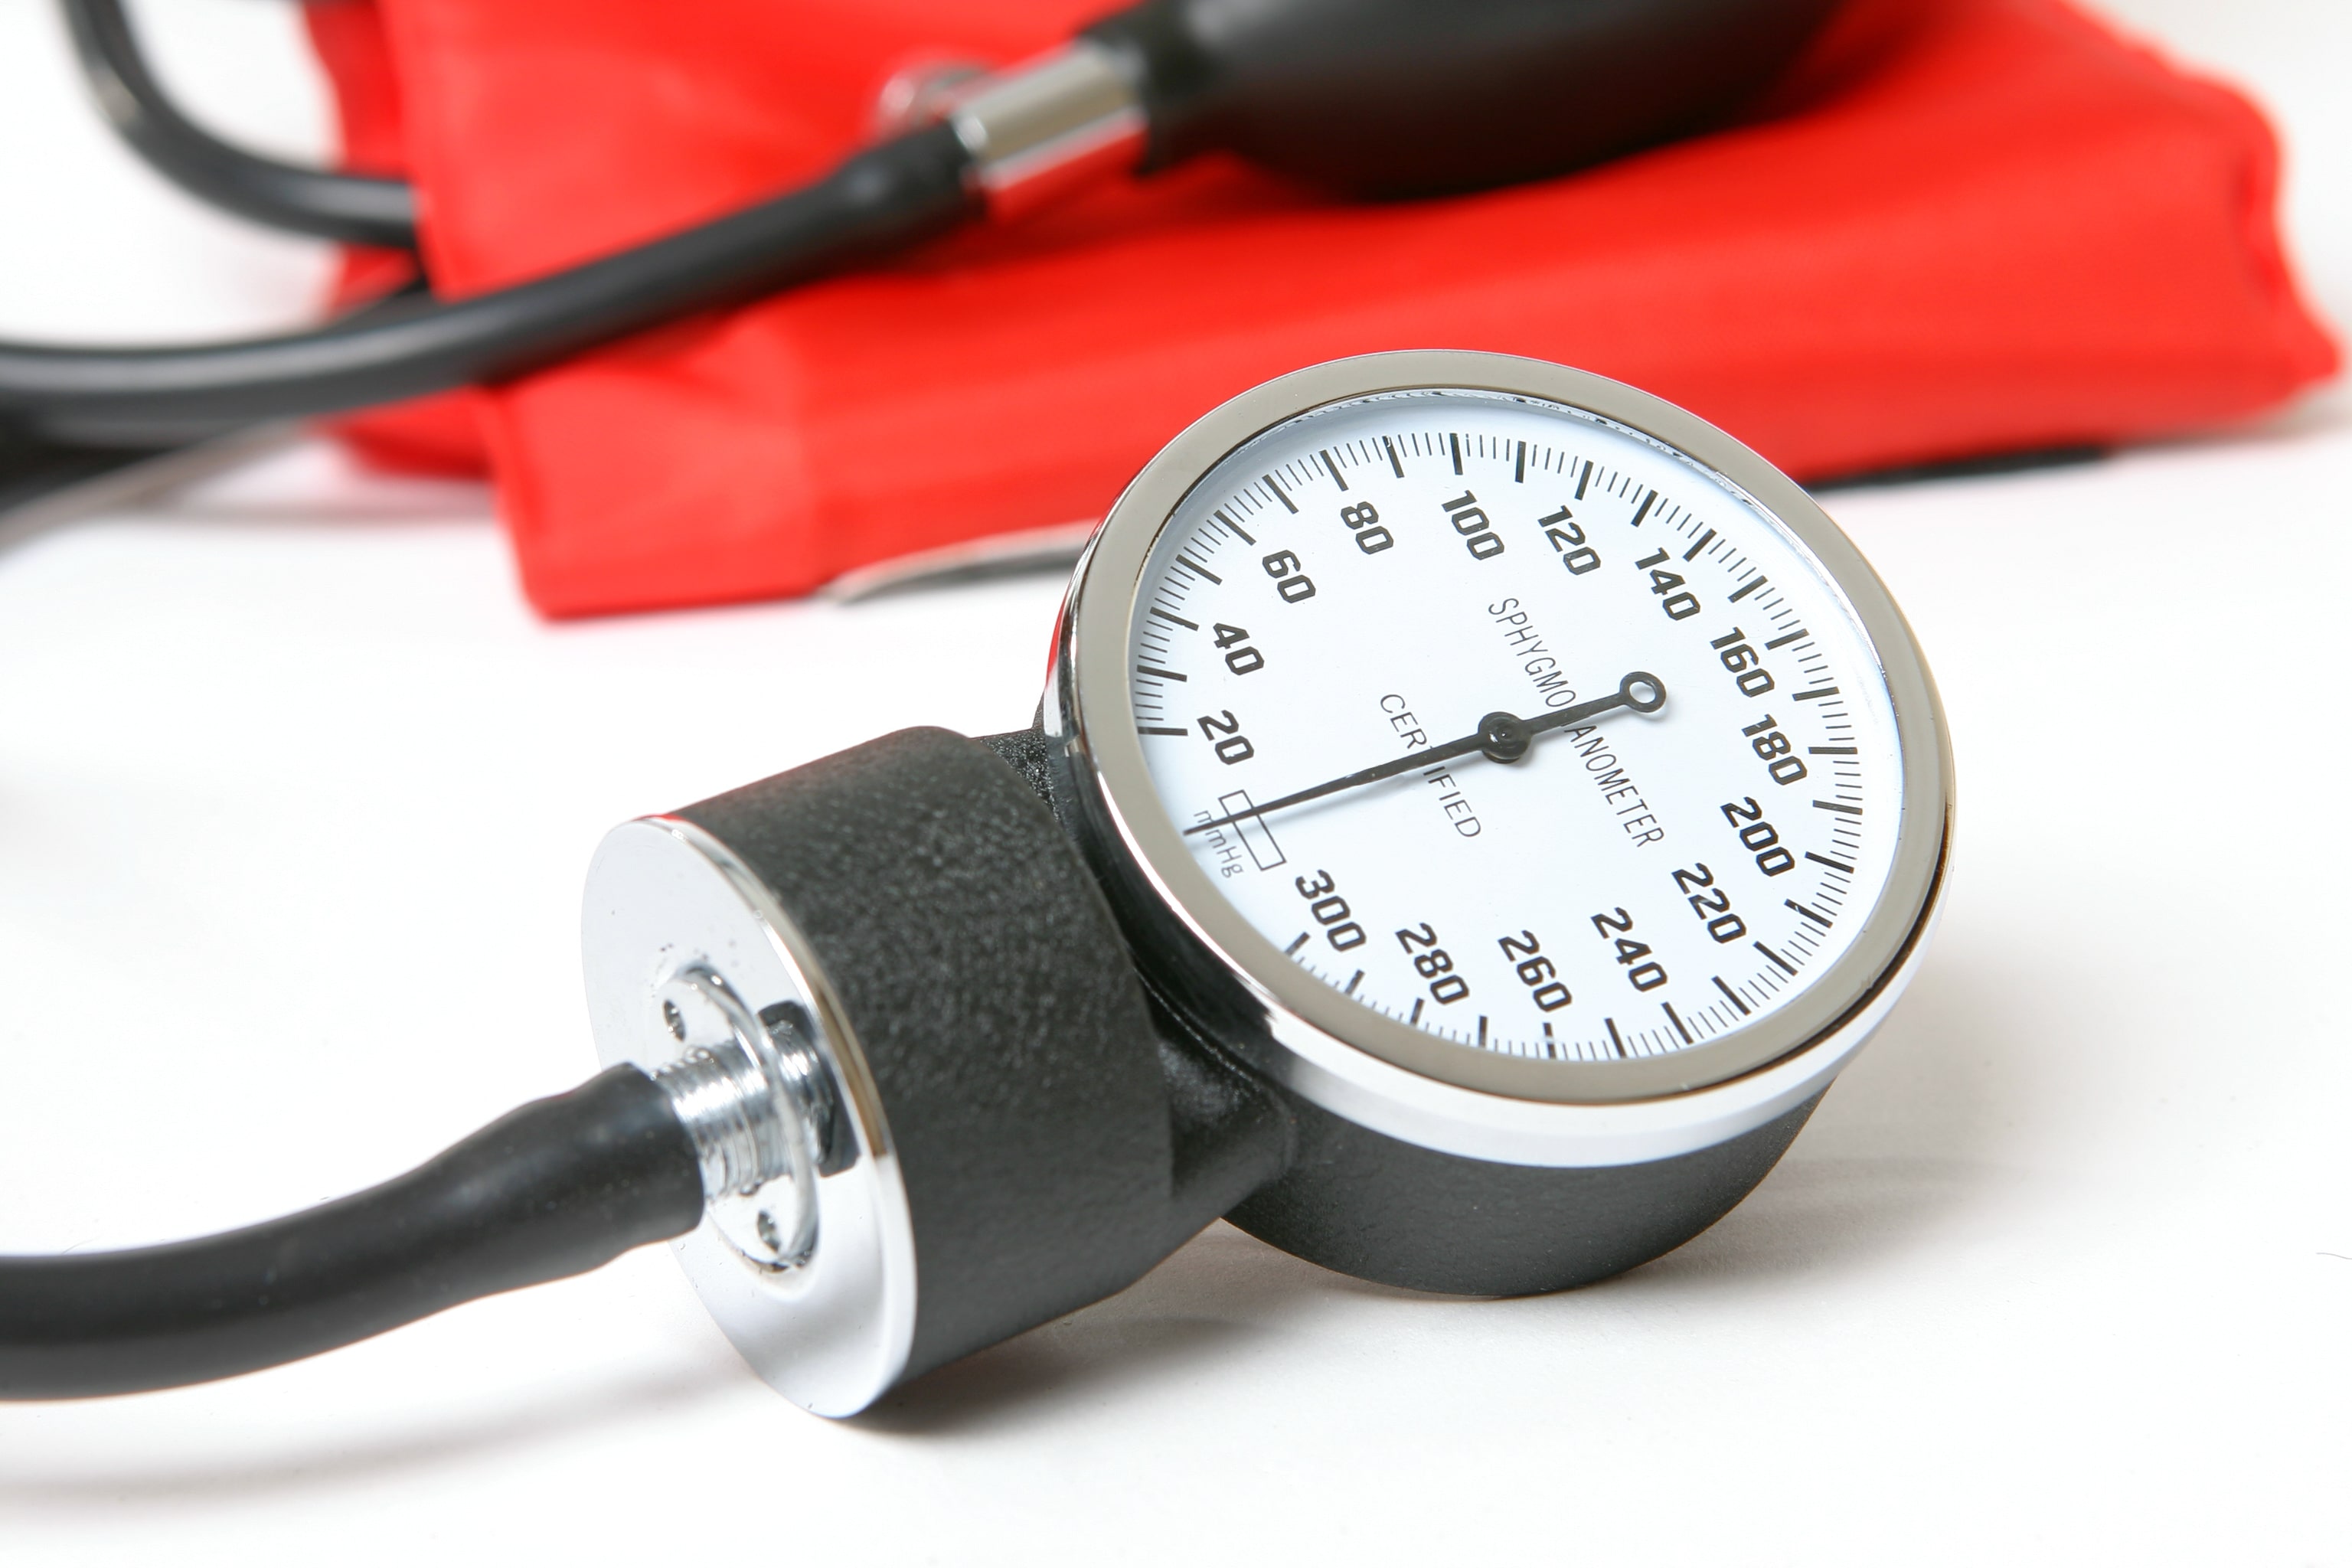 Tampa cardiovascular associates high blood pressure